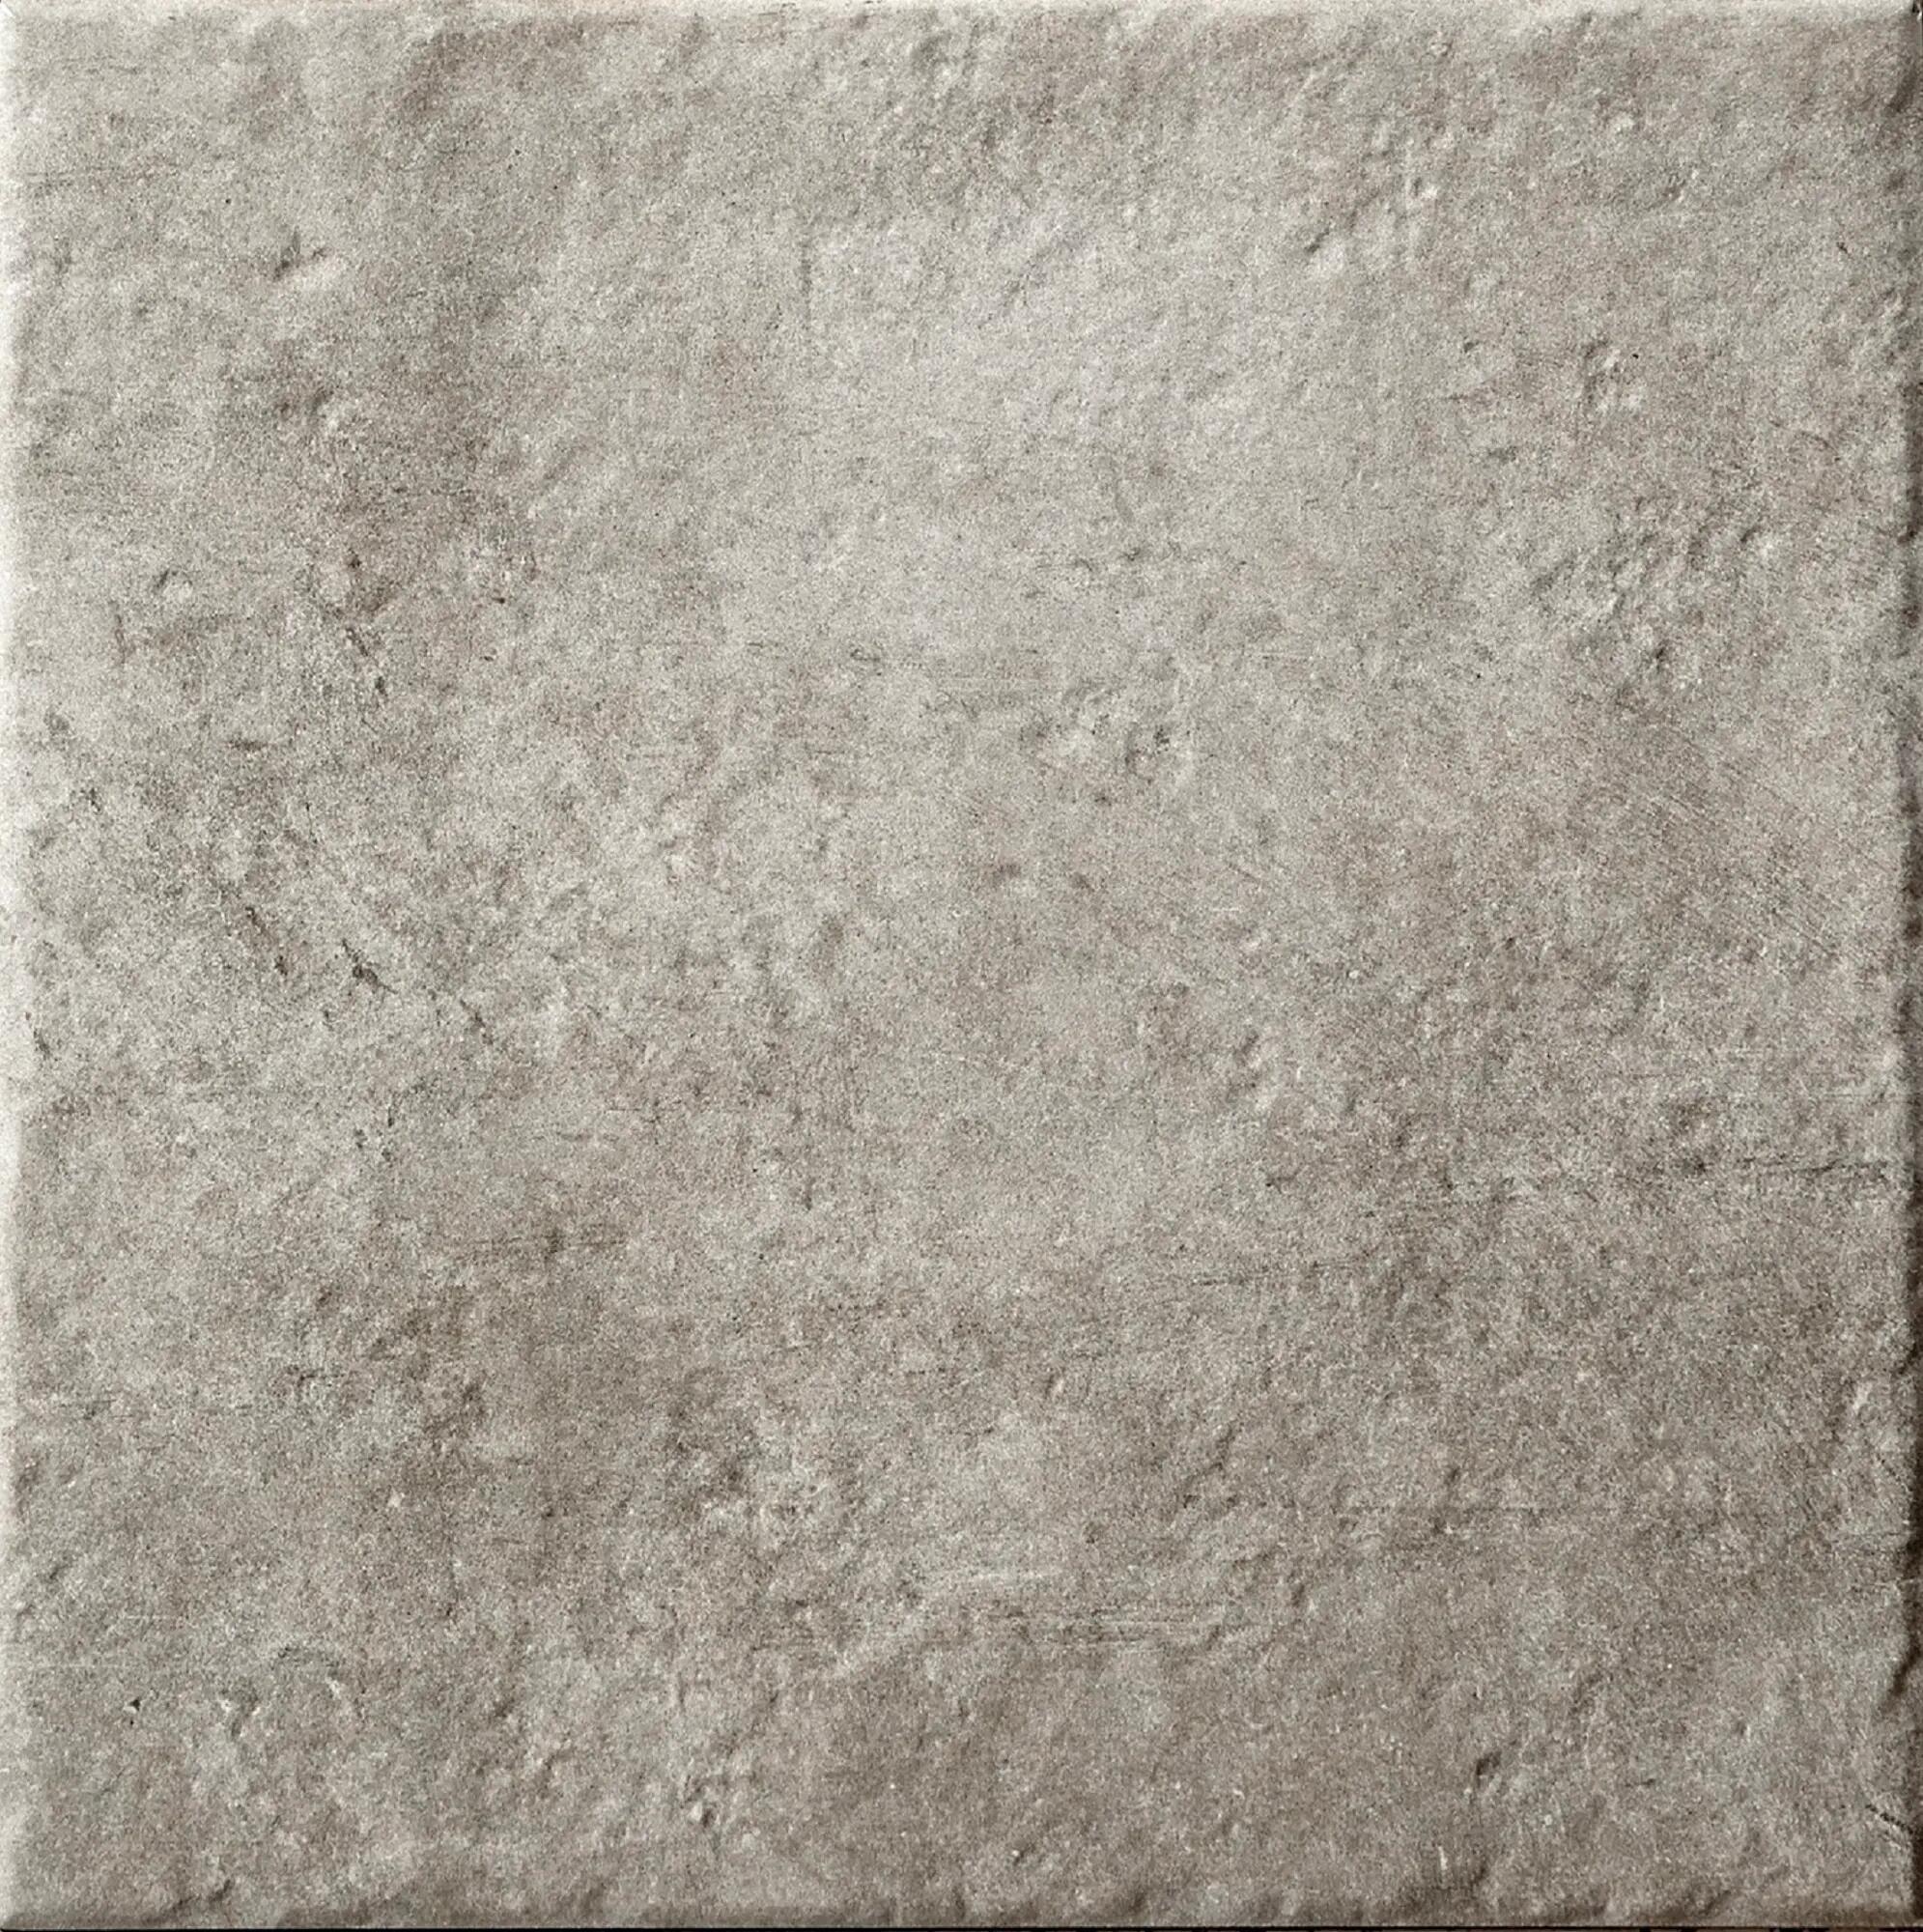 Suelo cerámico durango efecto terracota gris 33.3x33.3 cm c3